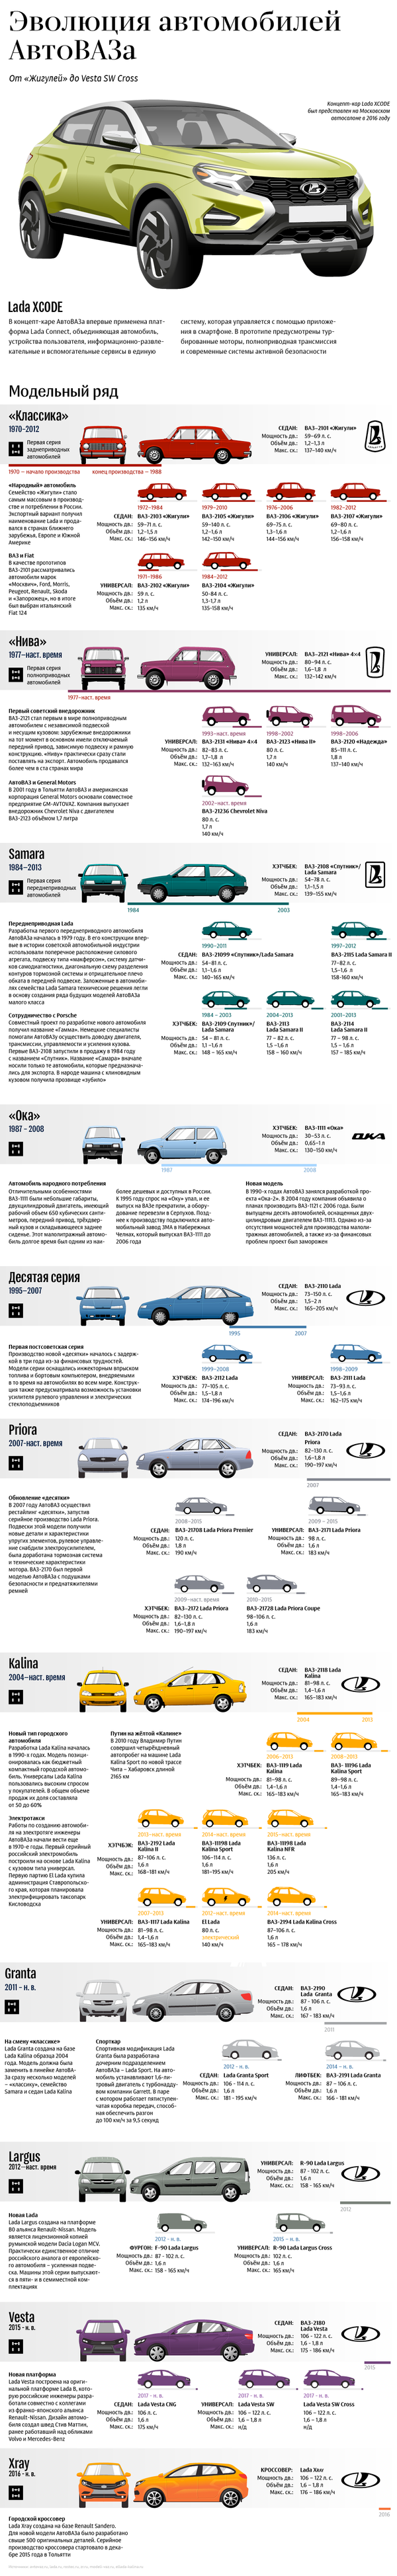 Эволюция автомобилей АвтоВАЗа - Sputnik Азербайджан